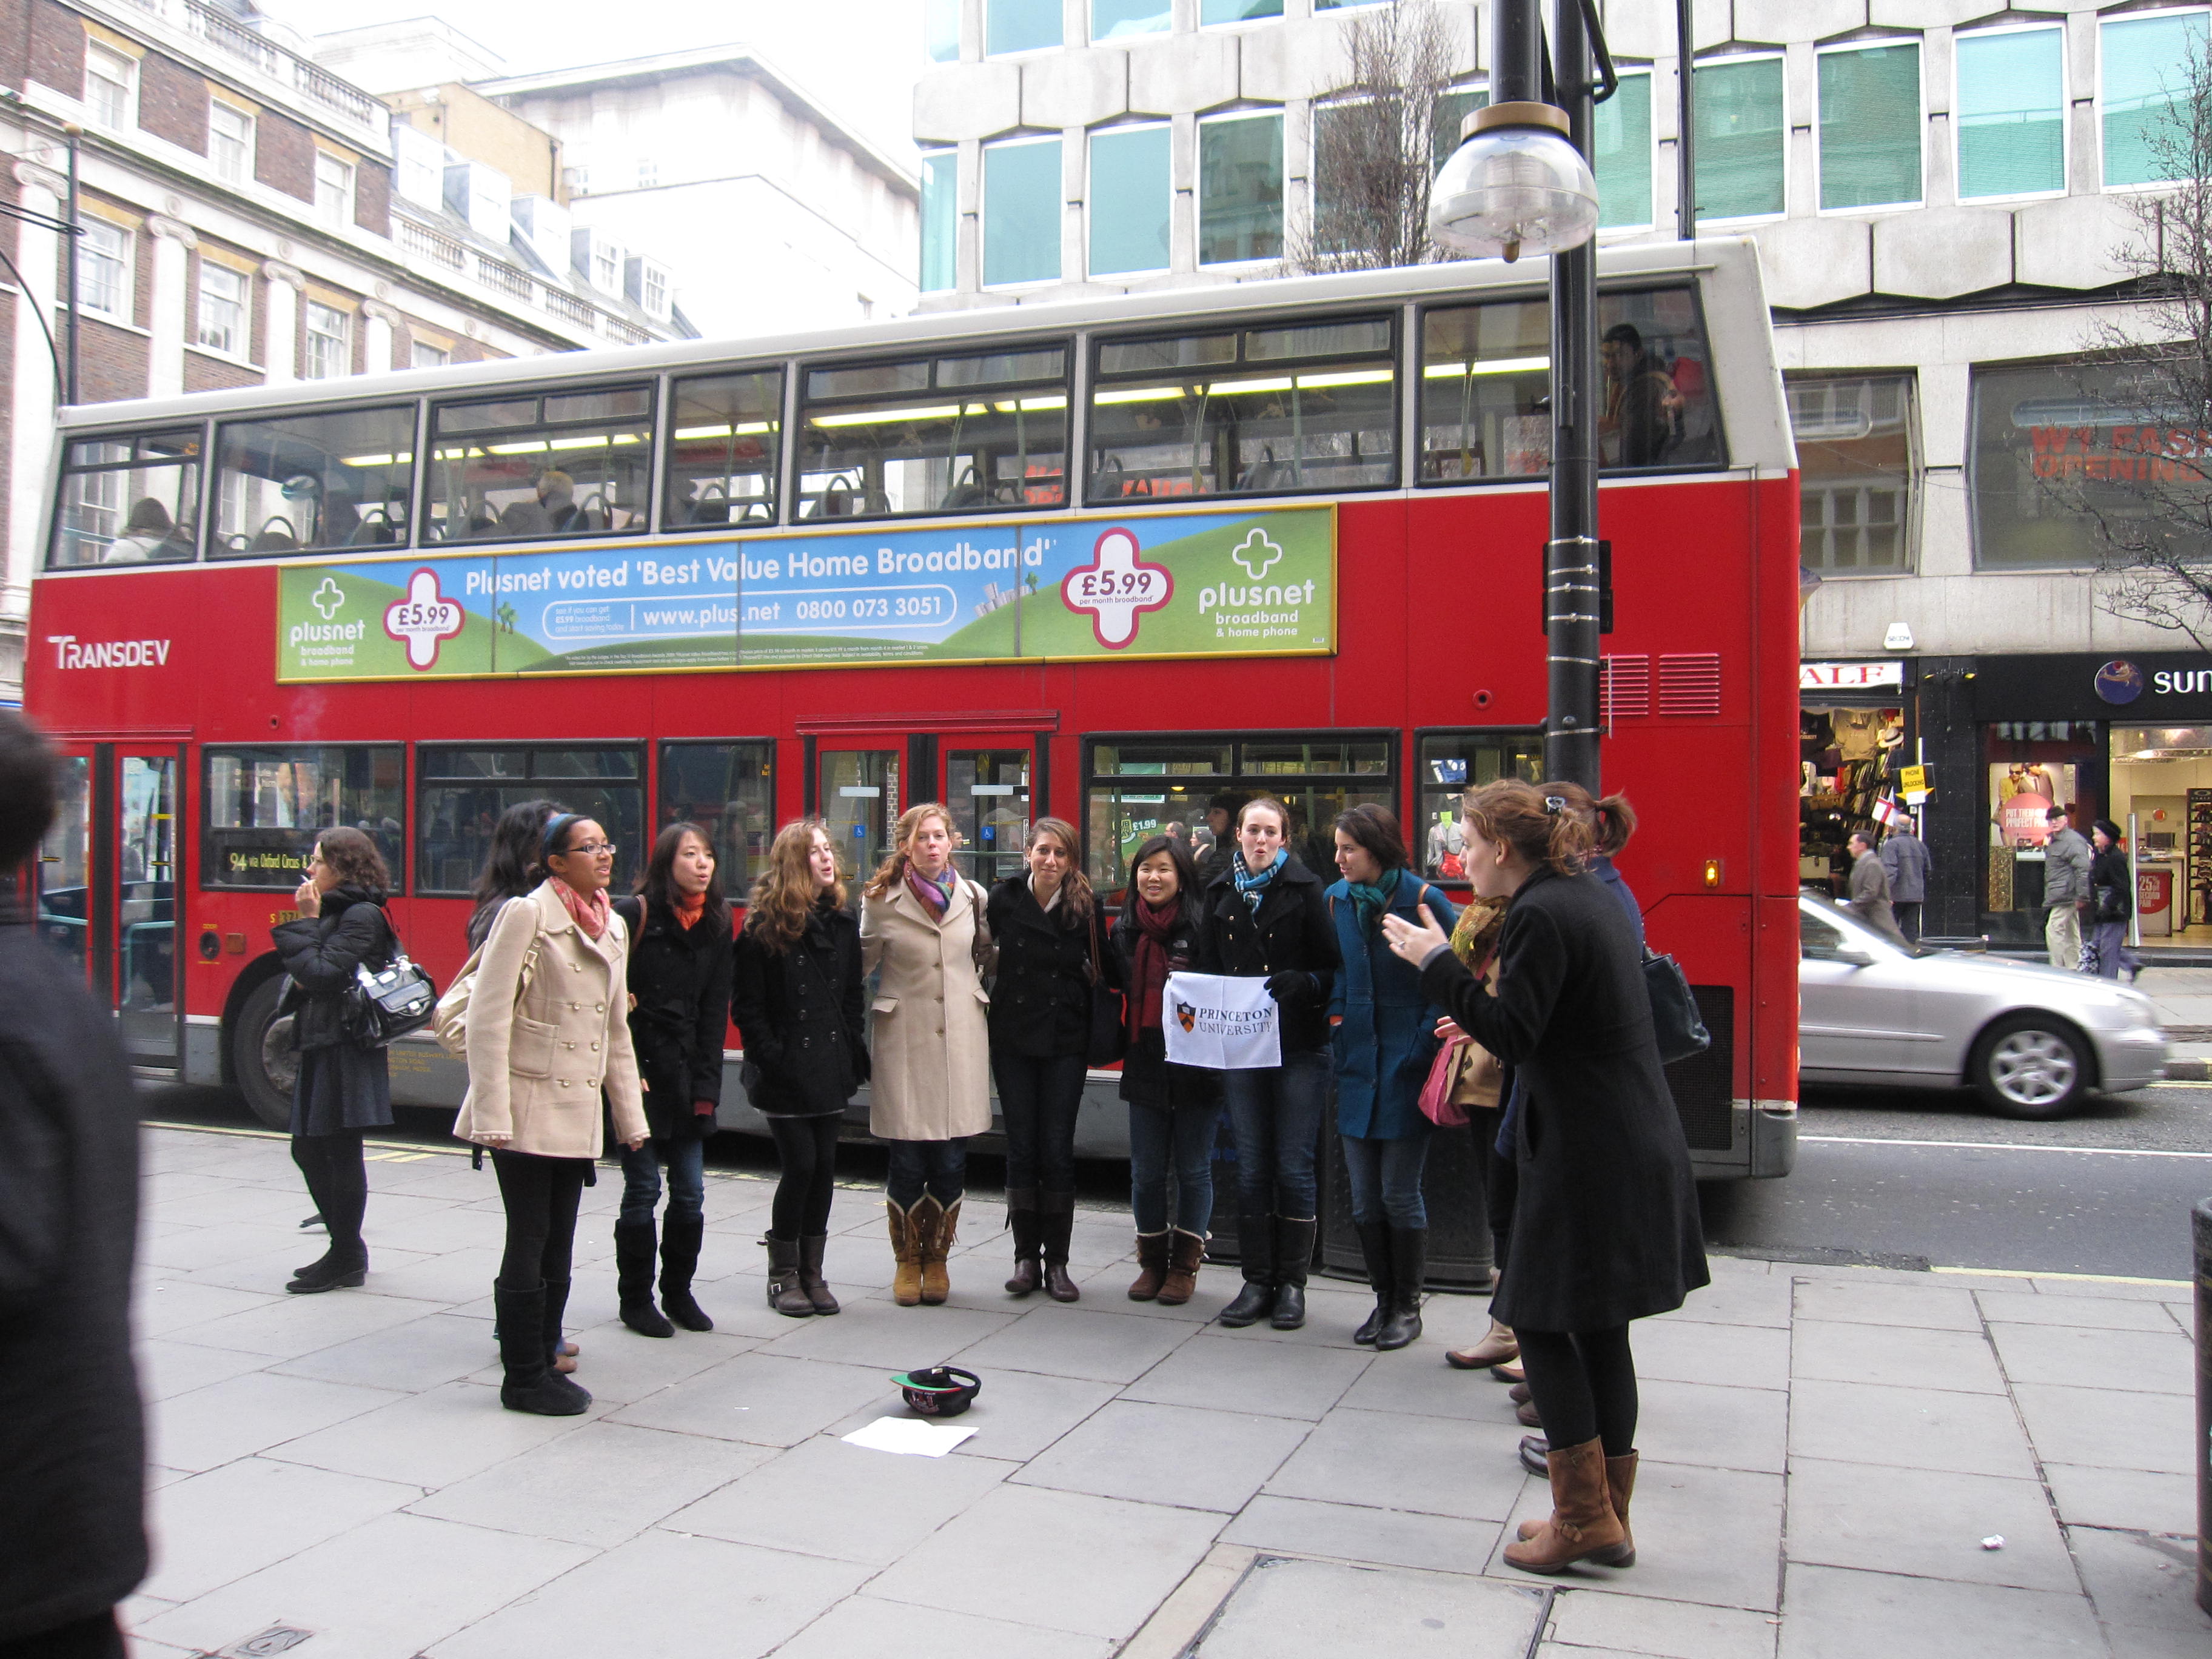 Busking on Oxford Street in London, January 2010